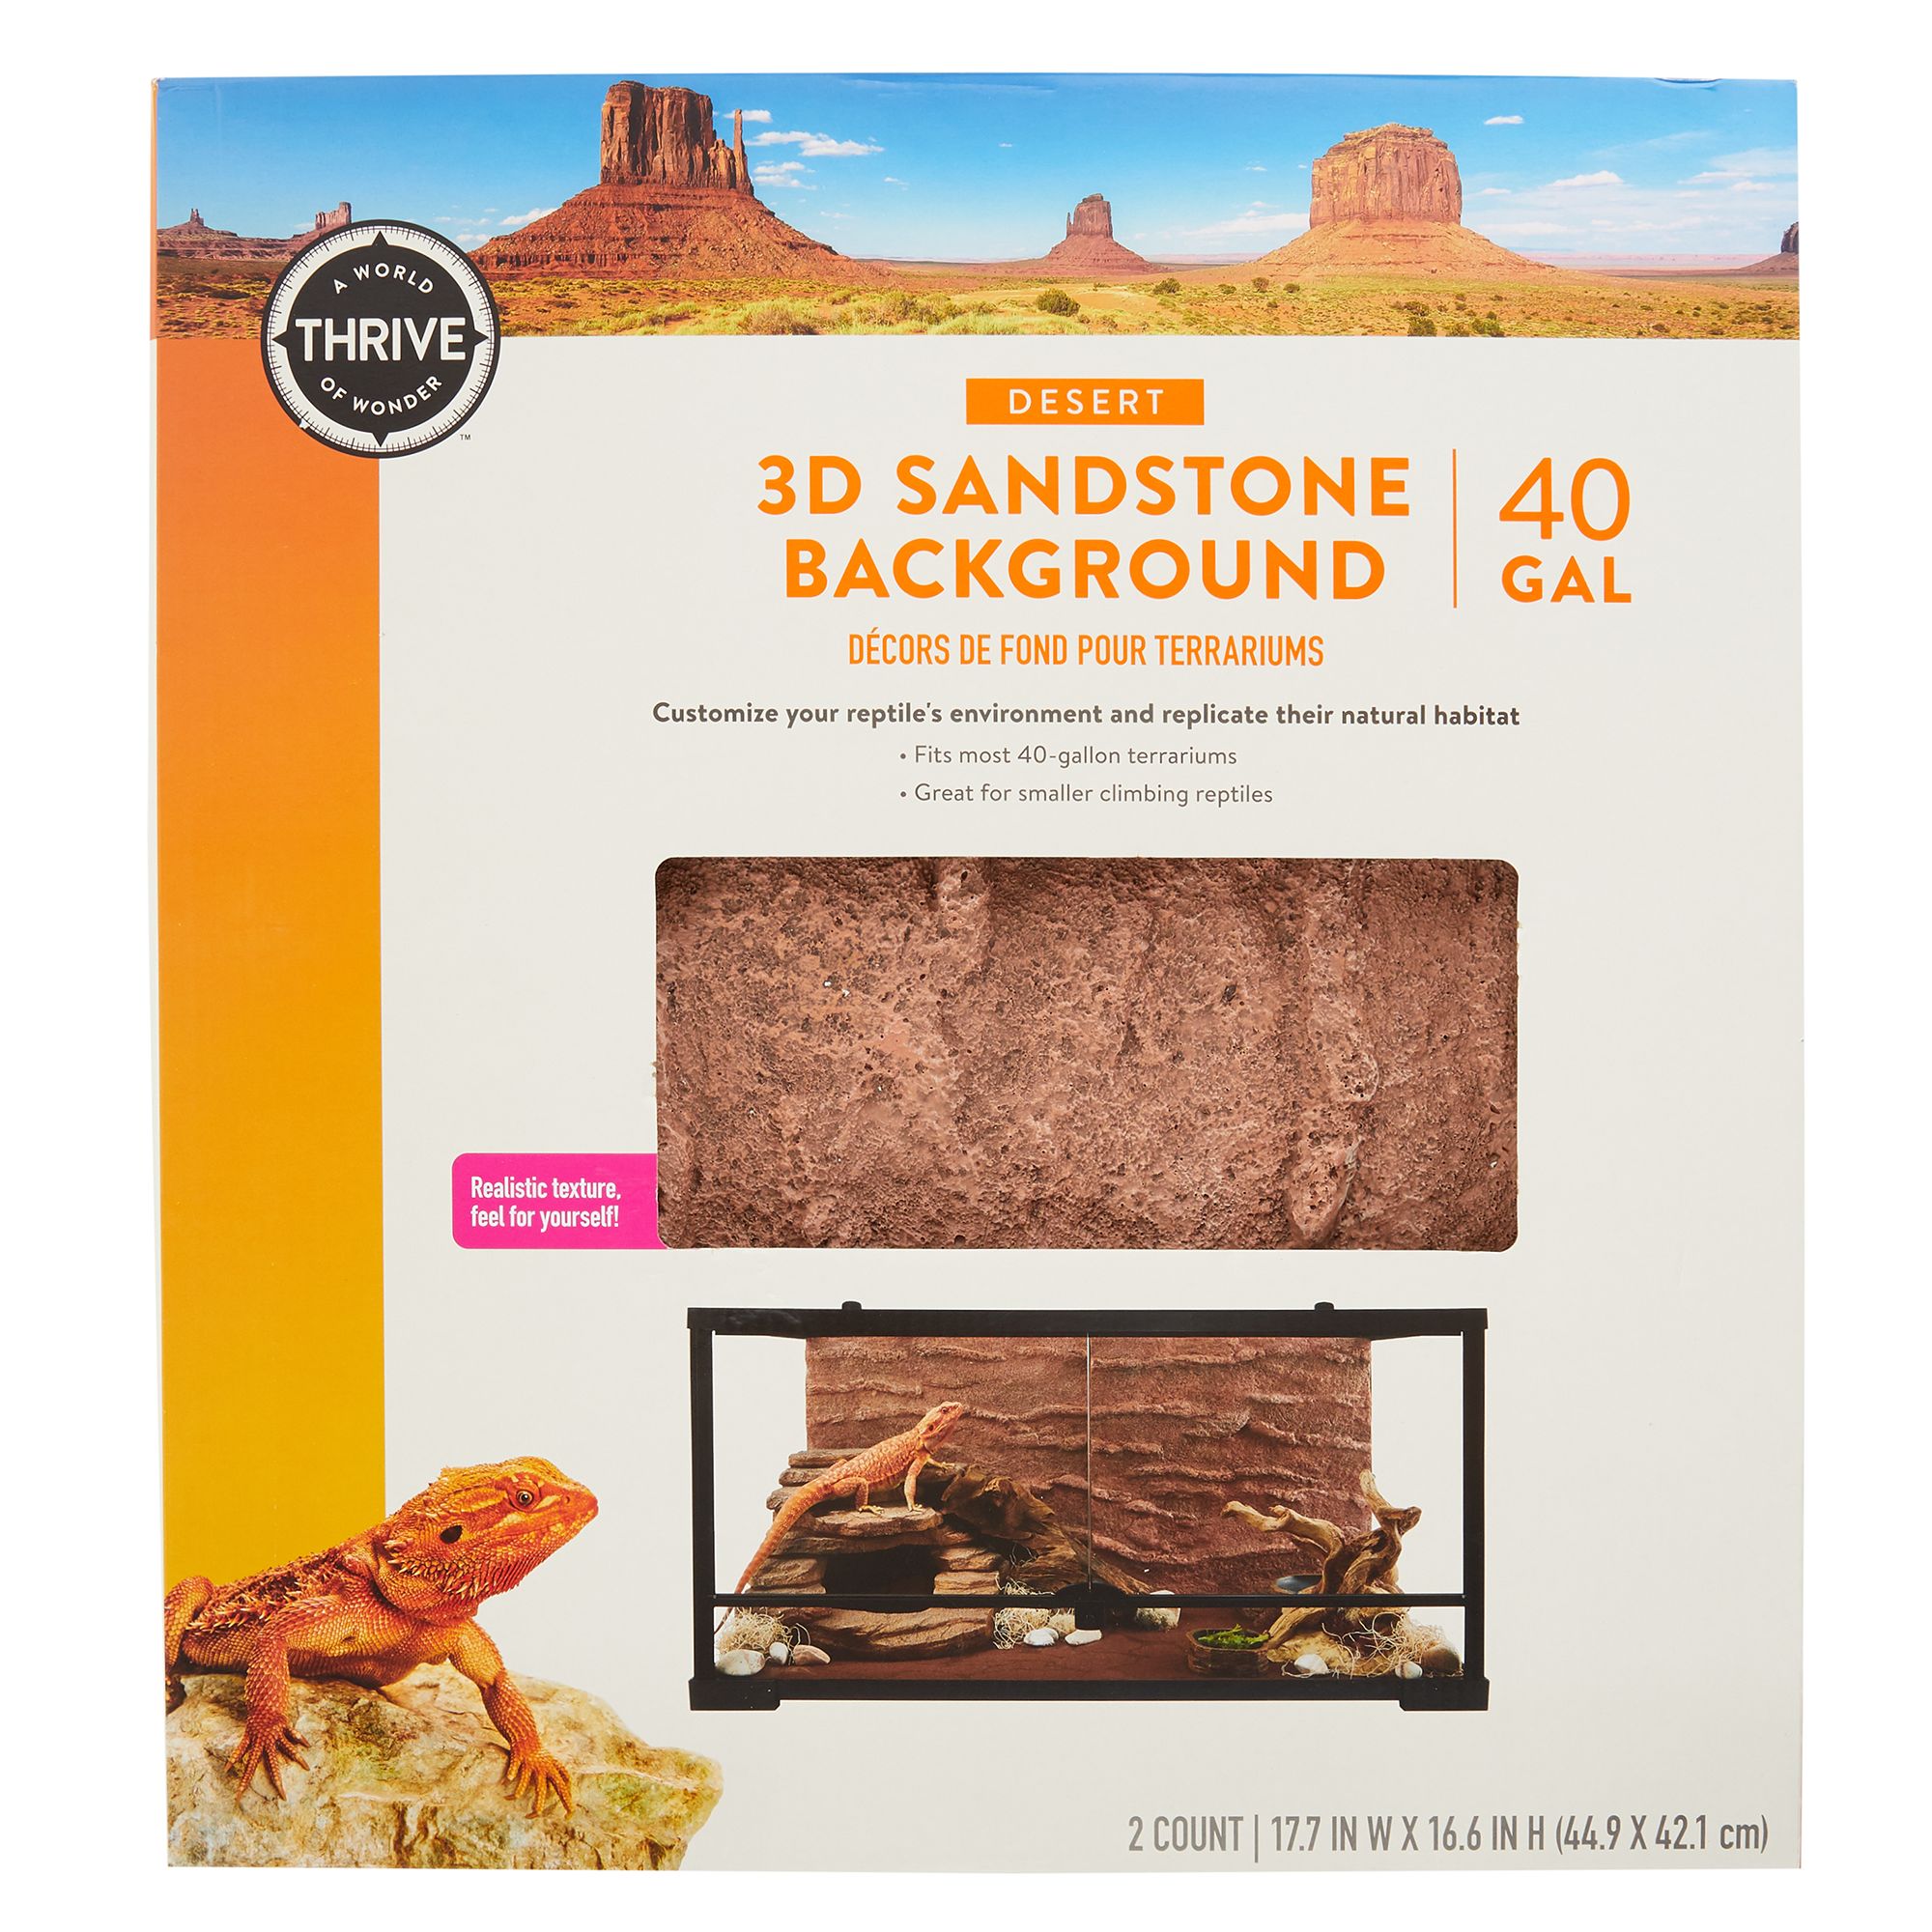 Thrive Desert 3D Sandstone Background | reptile Habitat Décor | PetSmart